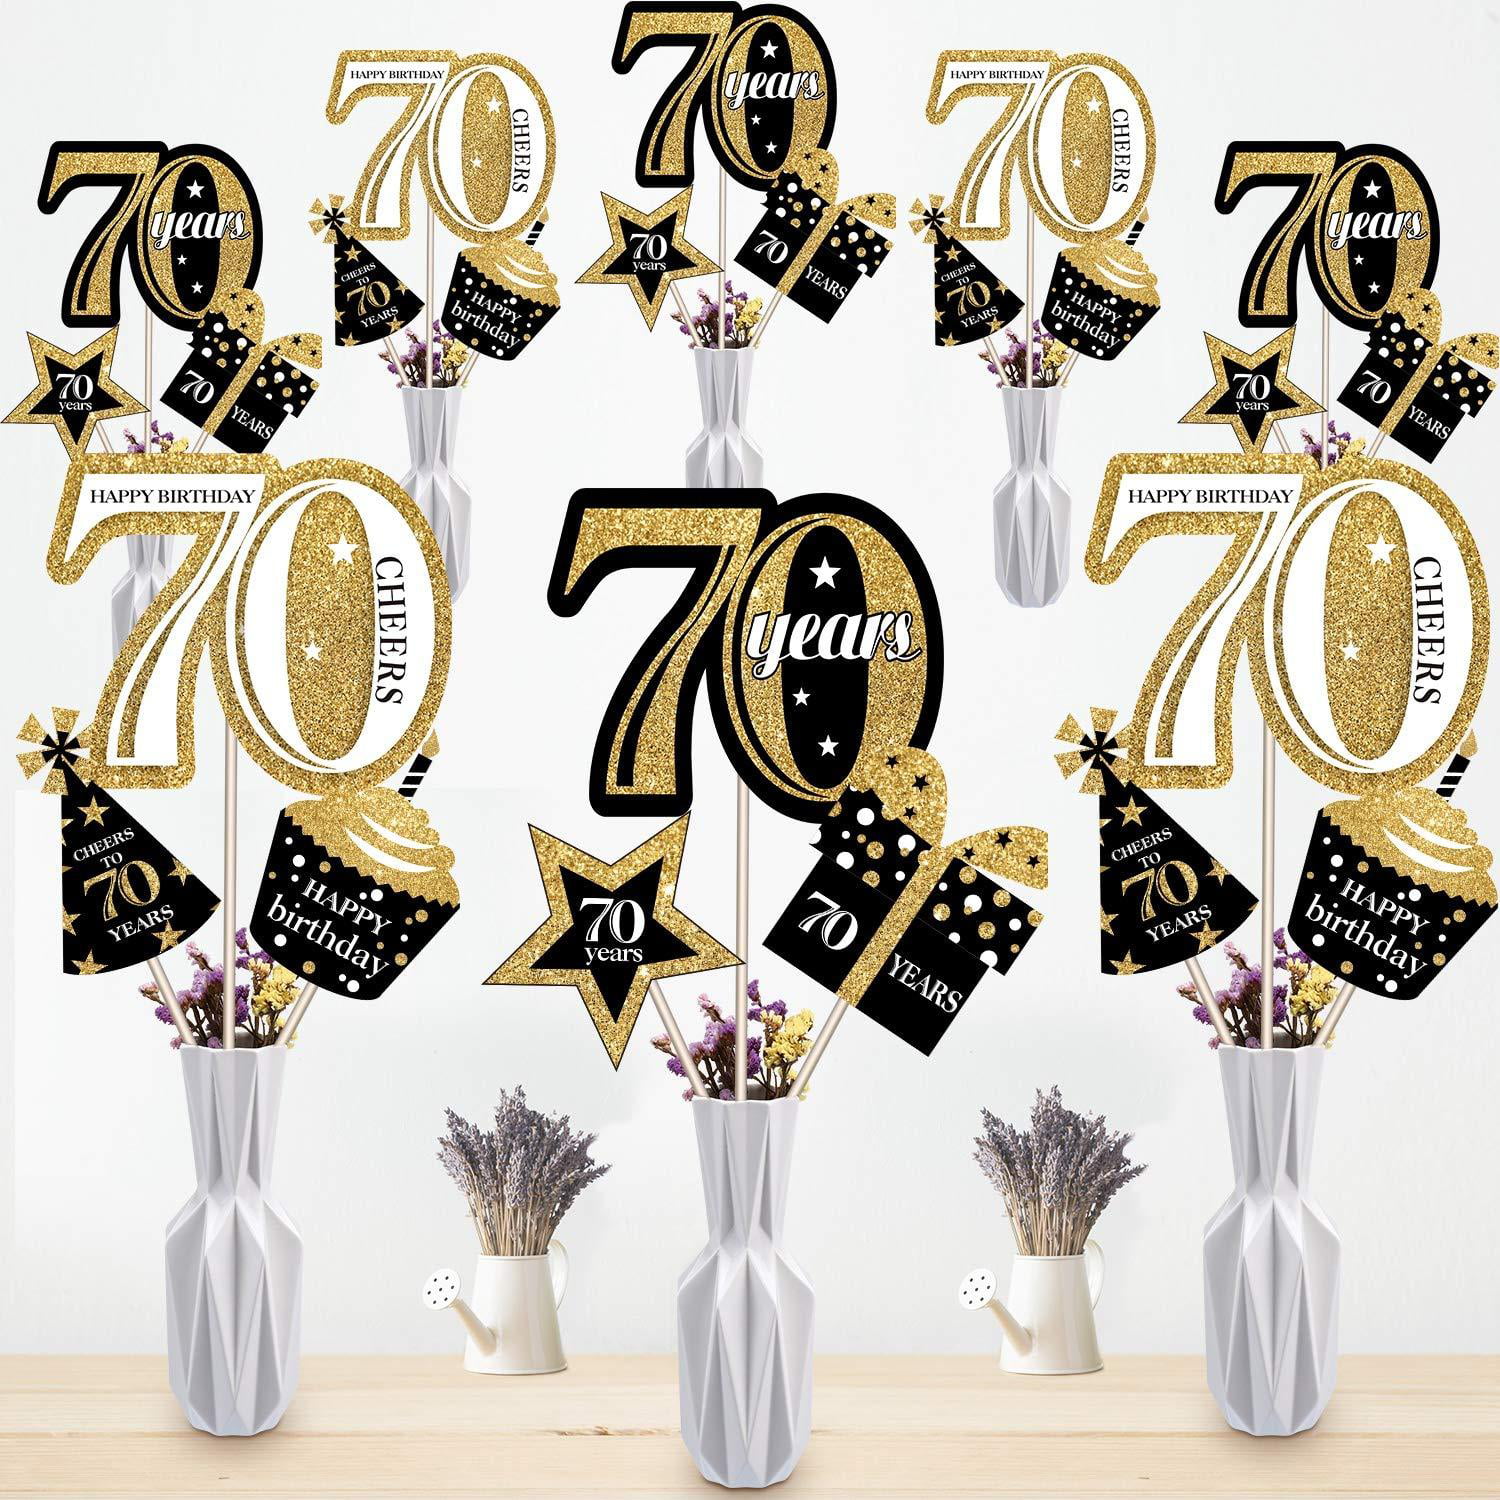 blulu-70th-birthday-party-decoration-set-golden-birthday-party-centerpiece-sticks-glitter-table